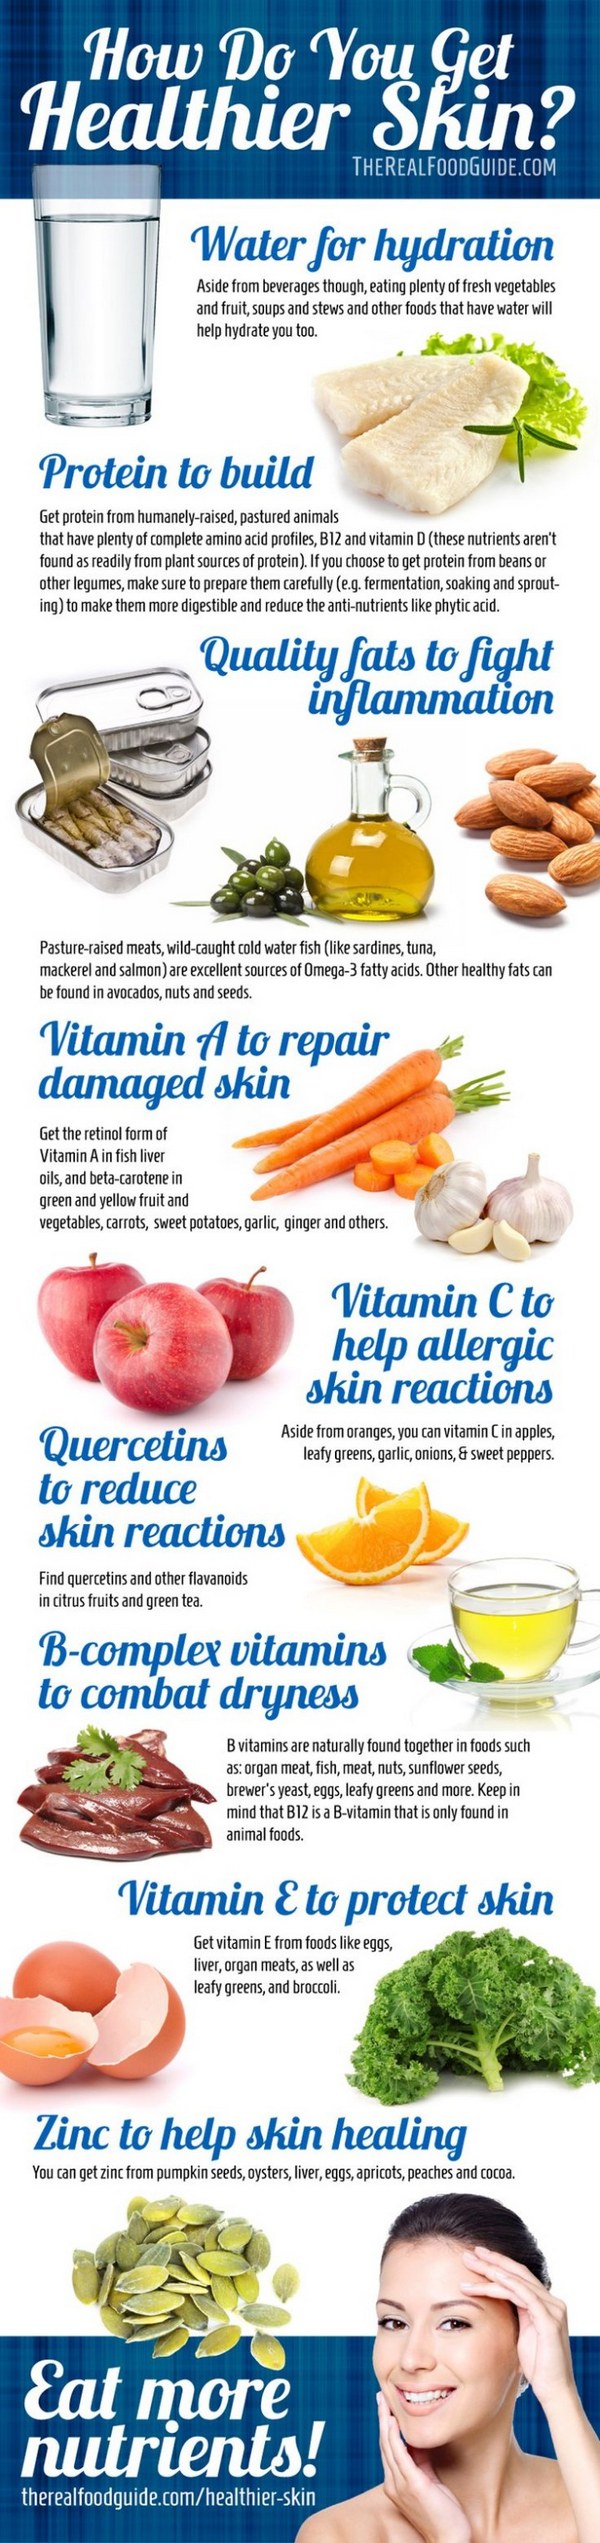 How Do You Get Healthier Skin via The Real Food Guide